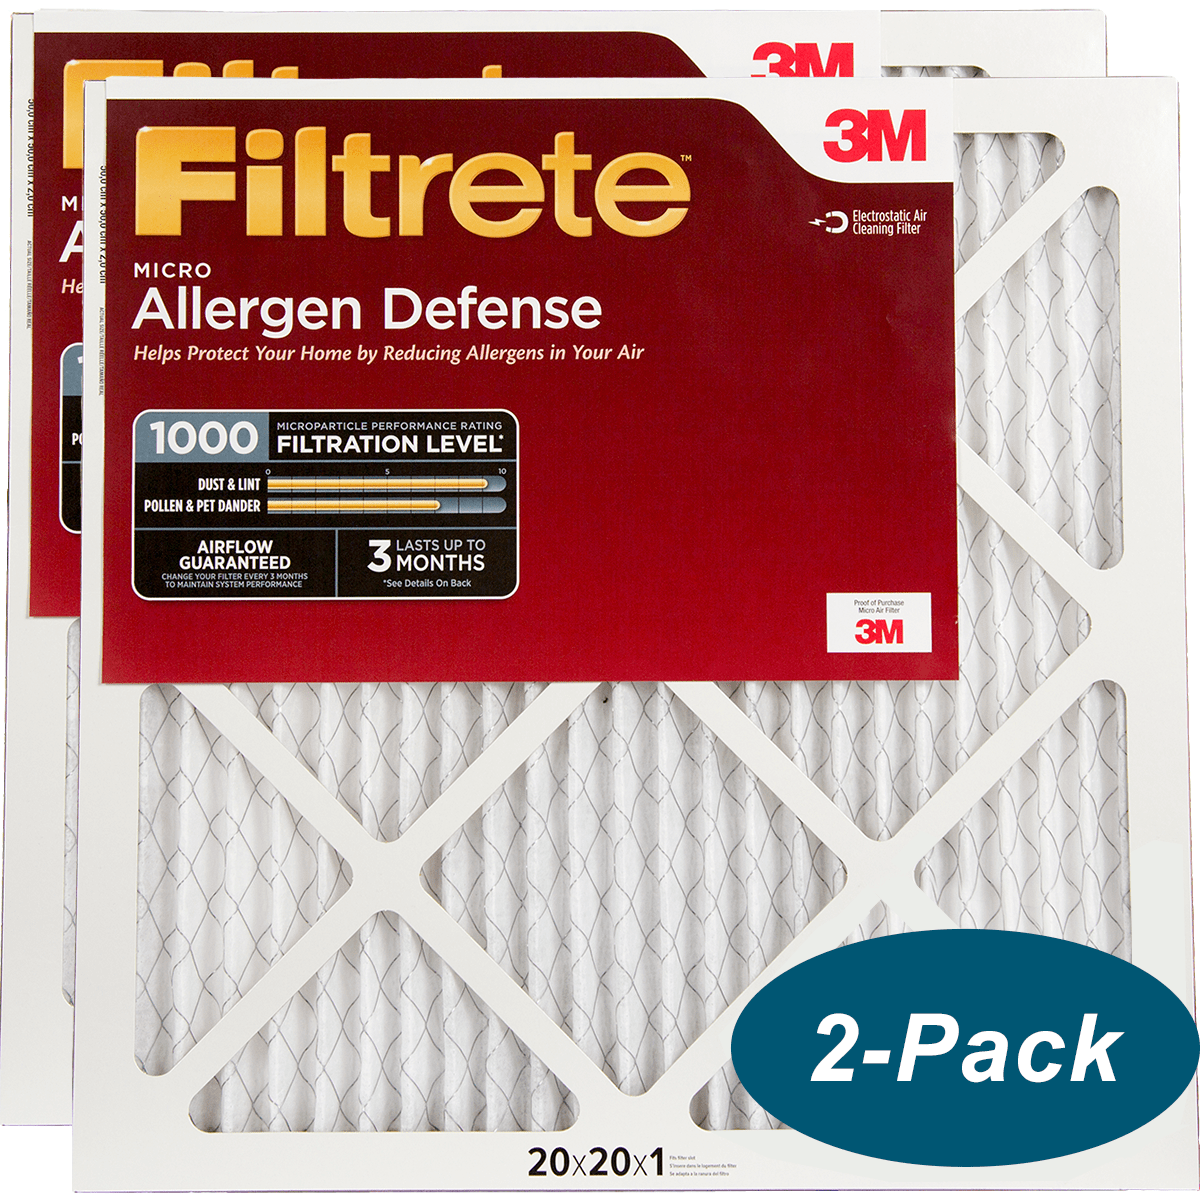 3M Filtrete 1-Inch Micro Allergen Defense MPR 1000 Air Filters 20x20x1 2-PACK